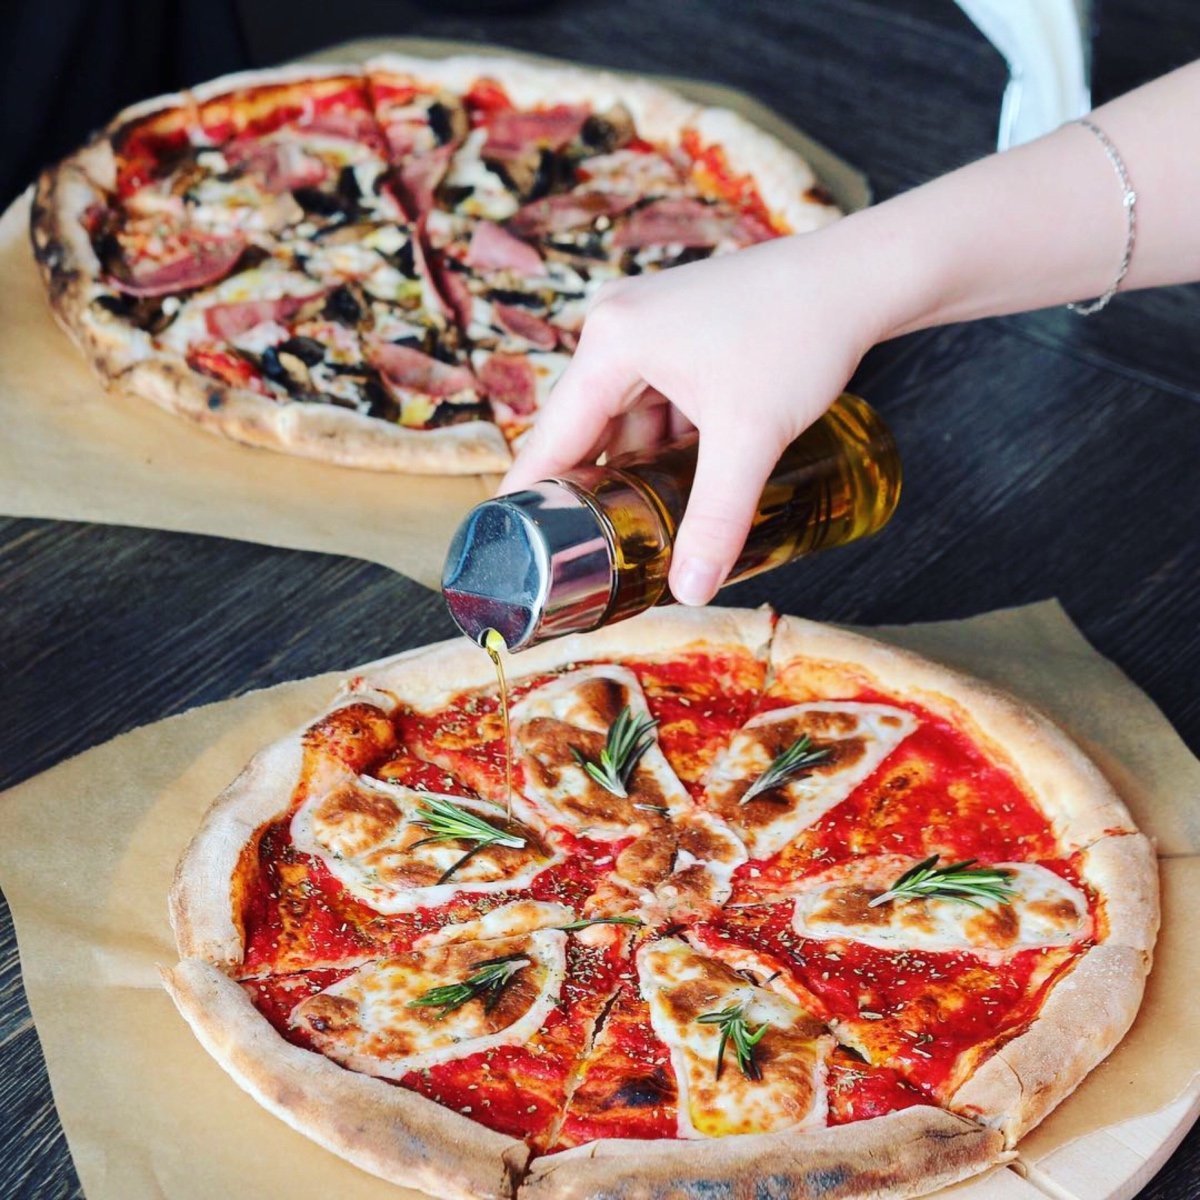 Самые вкусные поды. "Пицца". Красивая пицца. Креативная пицца. Итальянская пицца.